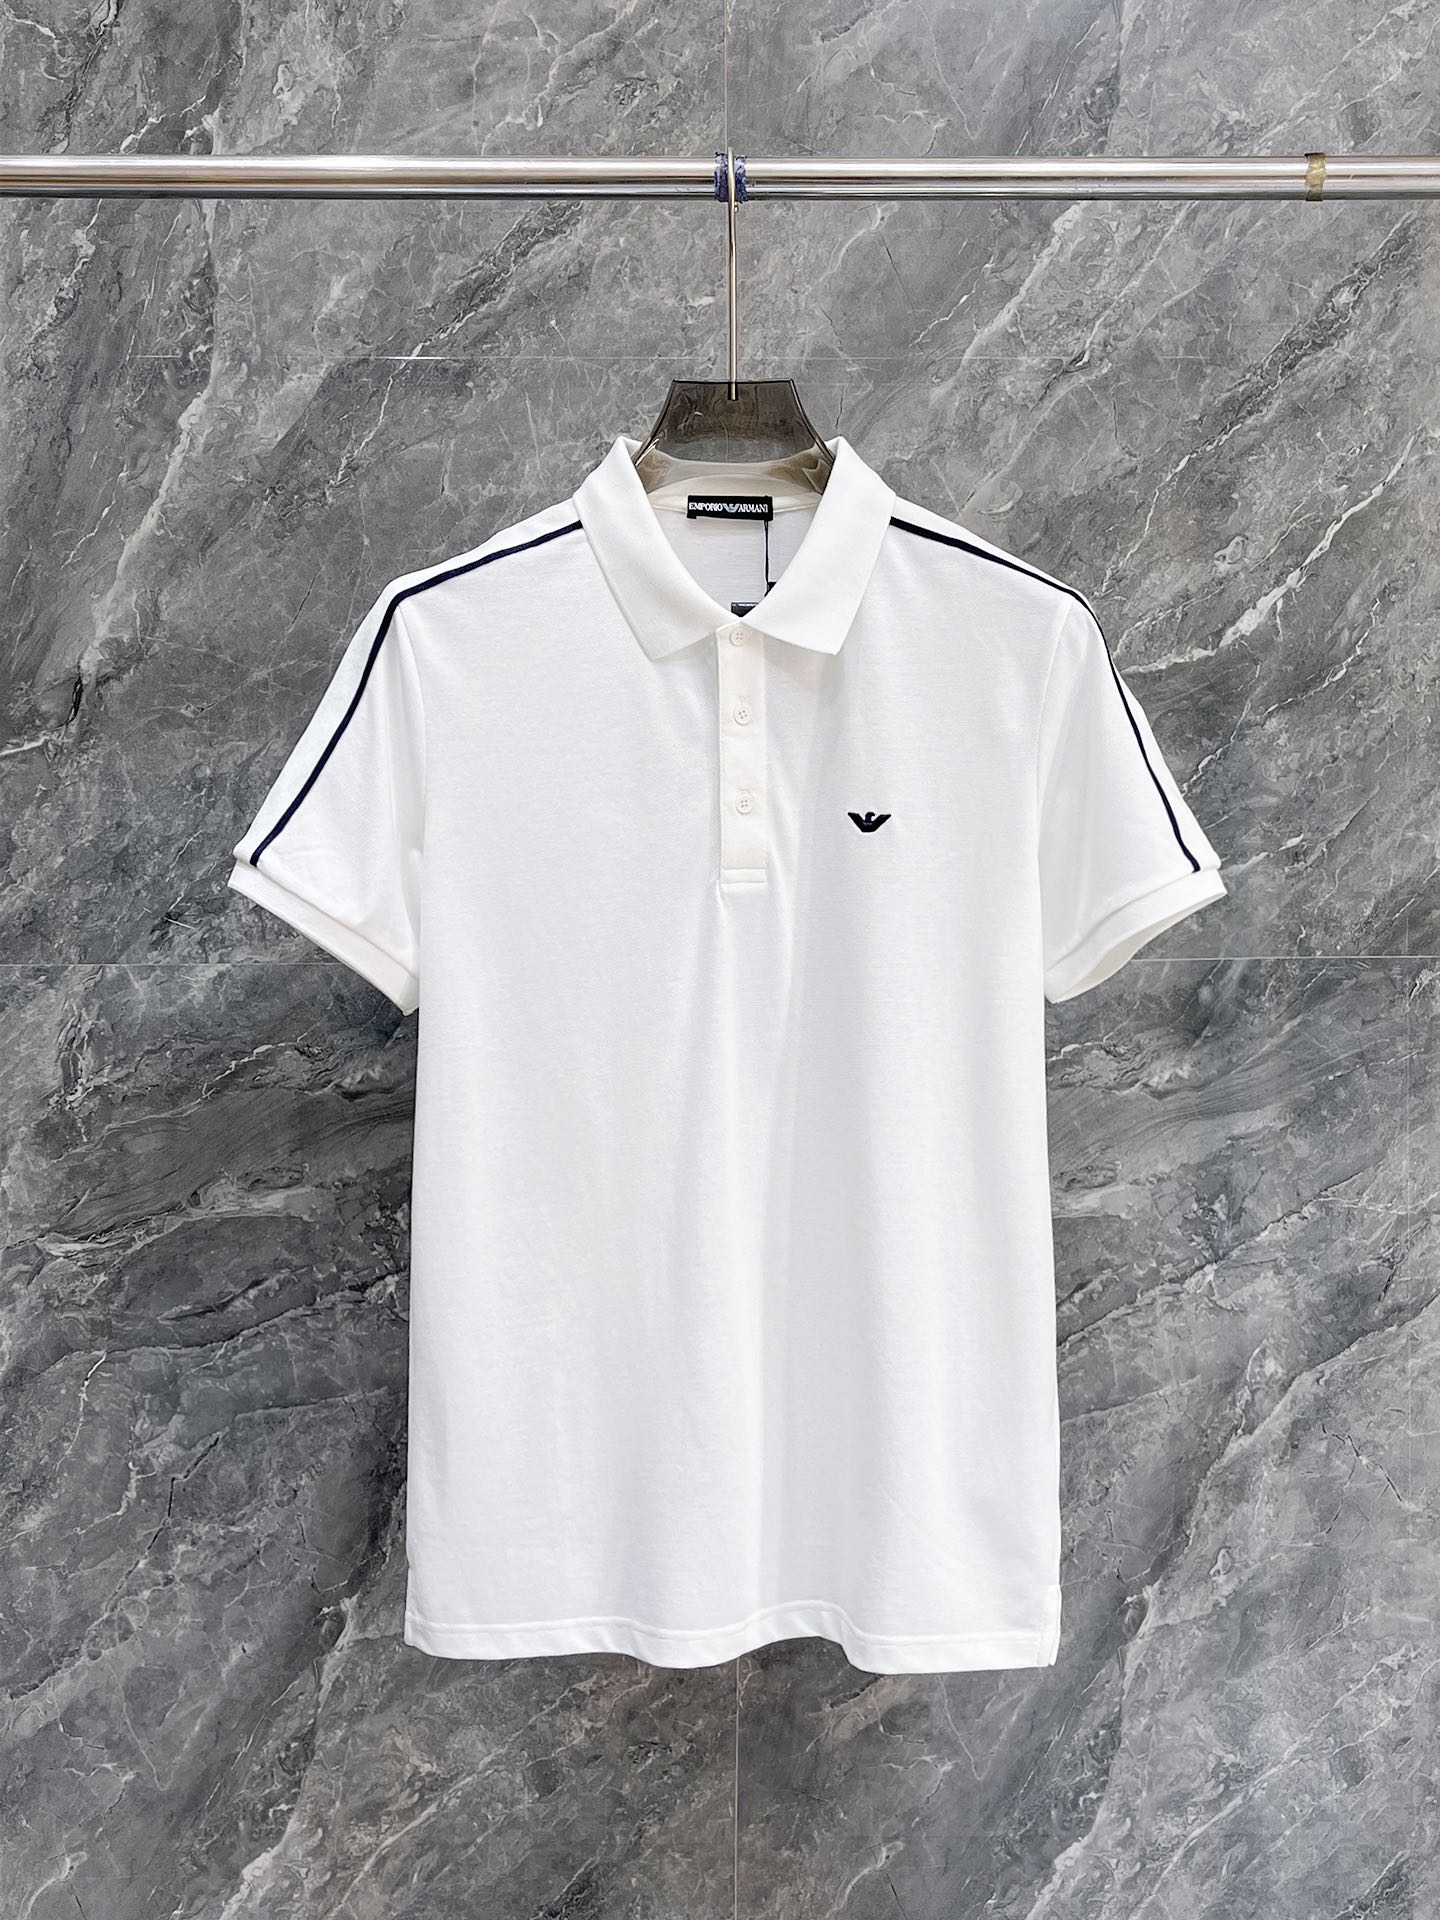 Armani Clothing Polo Men Cotton Summer Collection Fashion